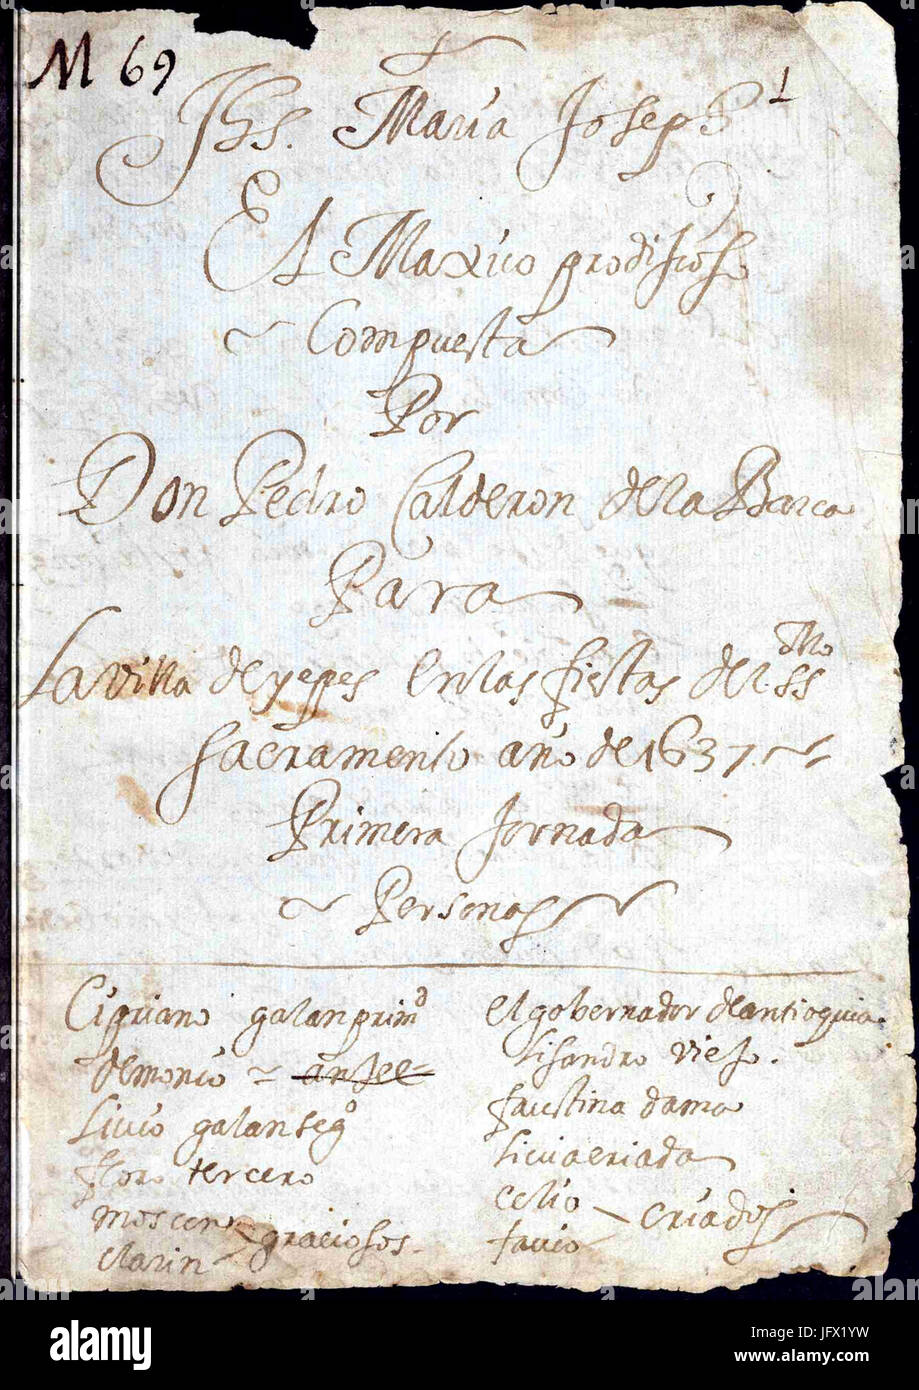 Comienzo de El mágico prodigioso (manuscrito autógrafo) Foto de stock